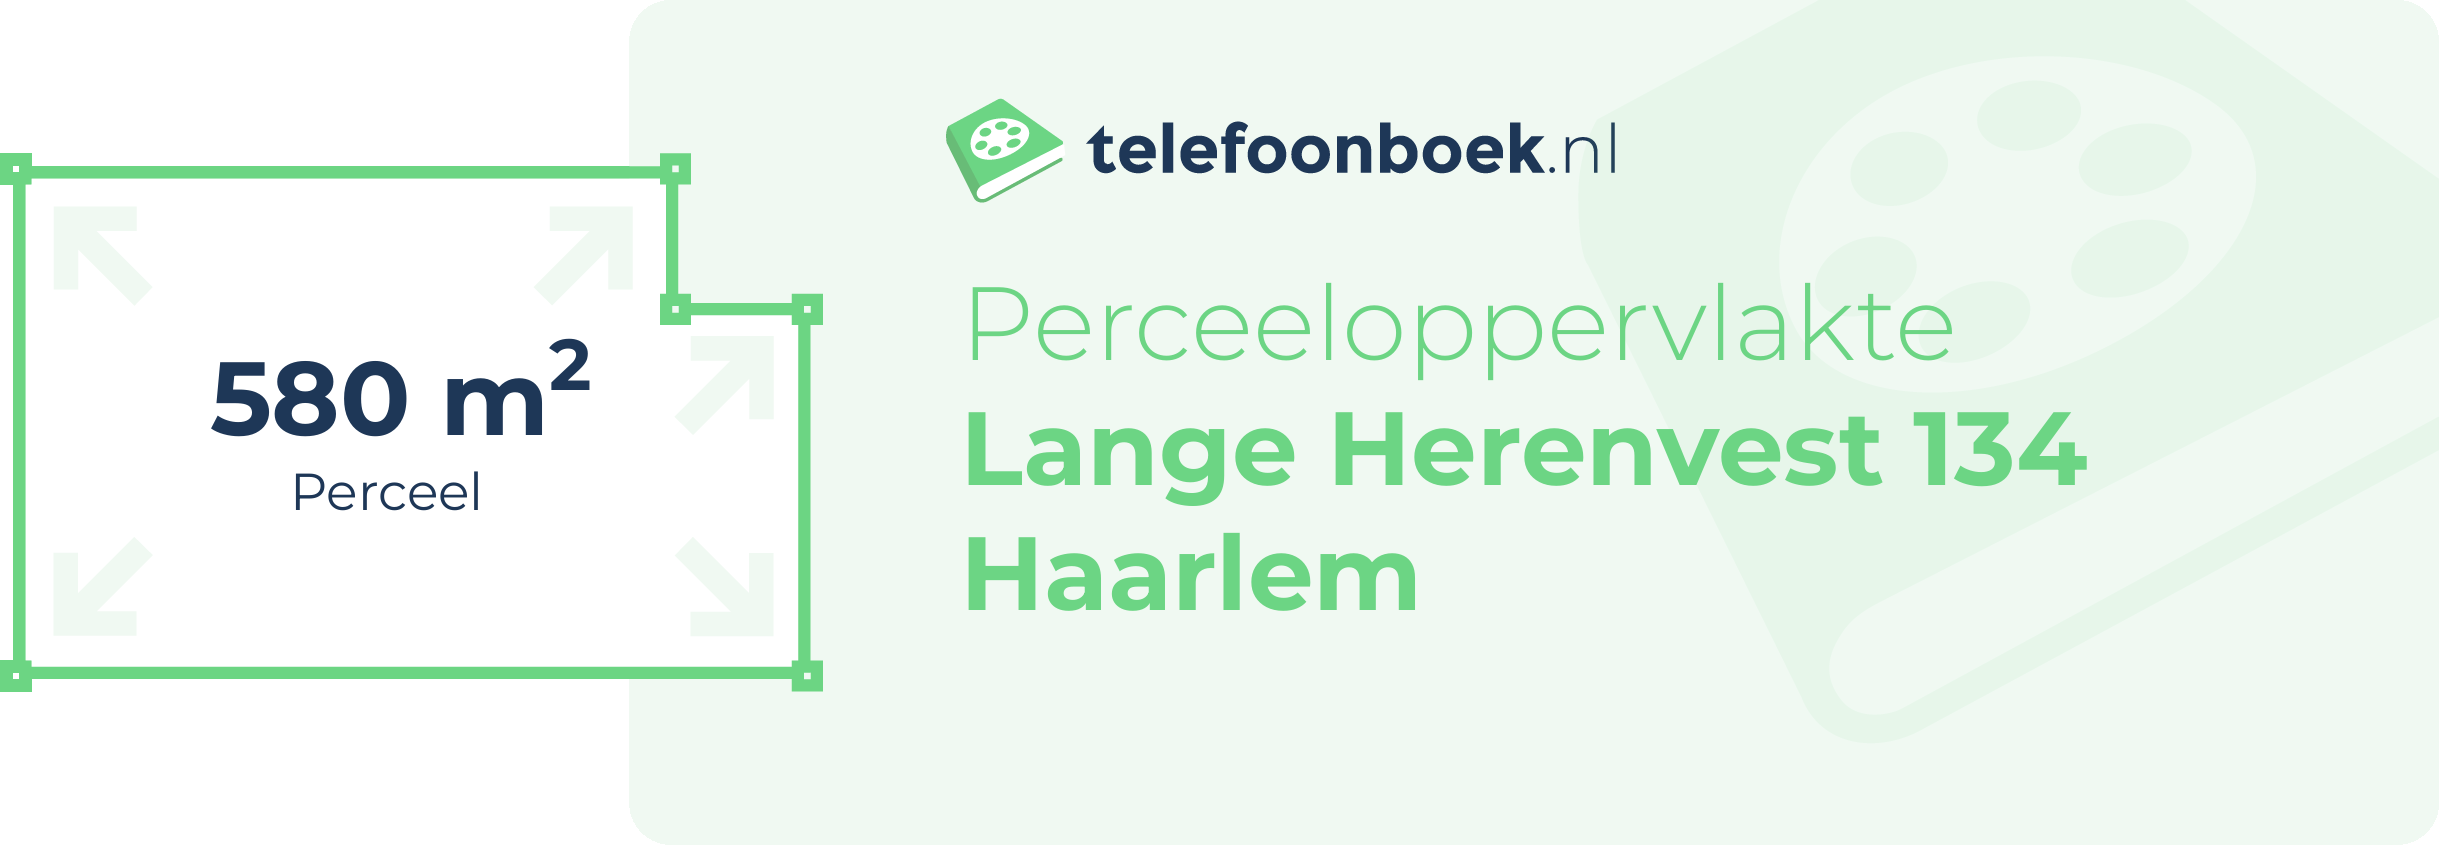 Perceeloppervlakte Lange Herenvest 134 Haarlem